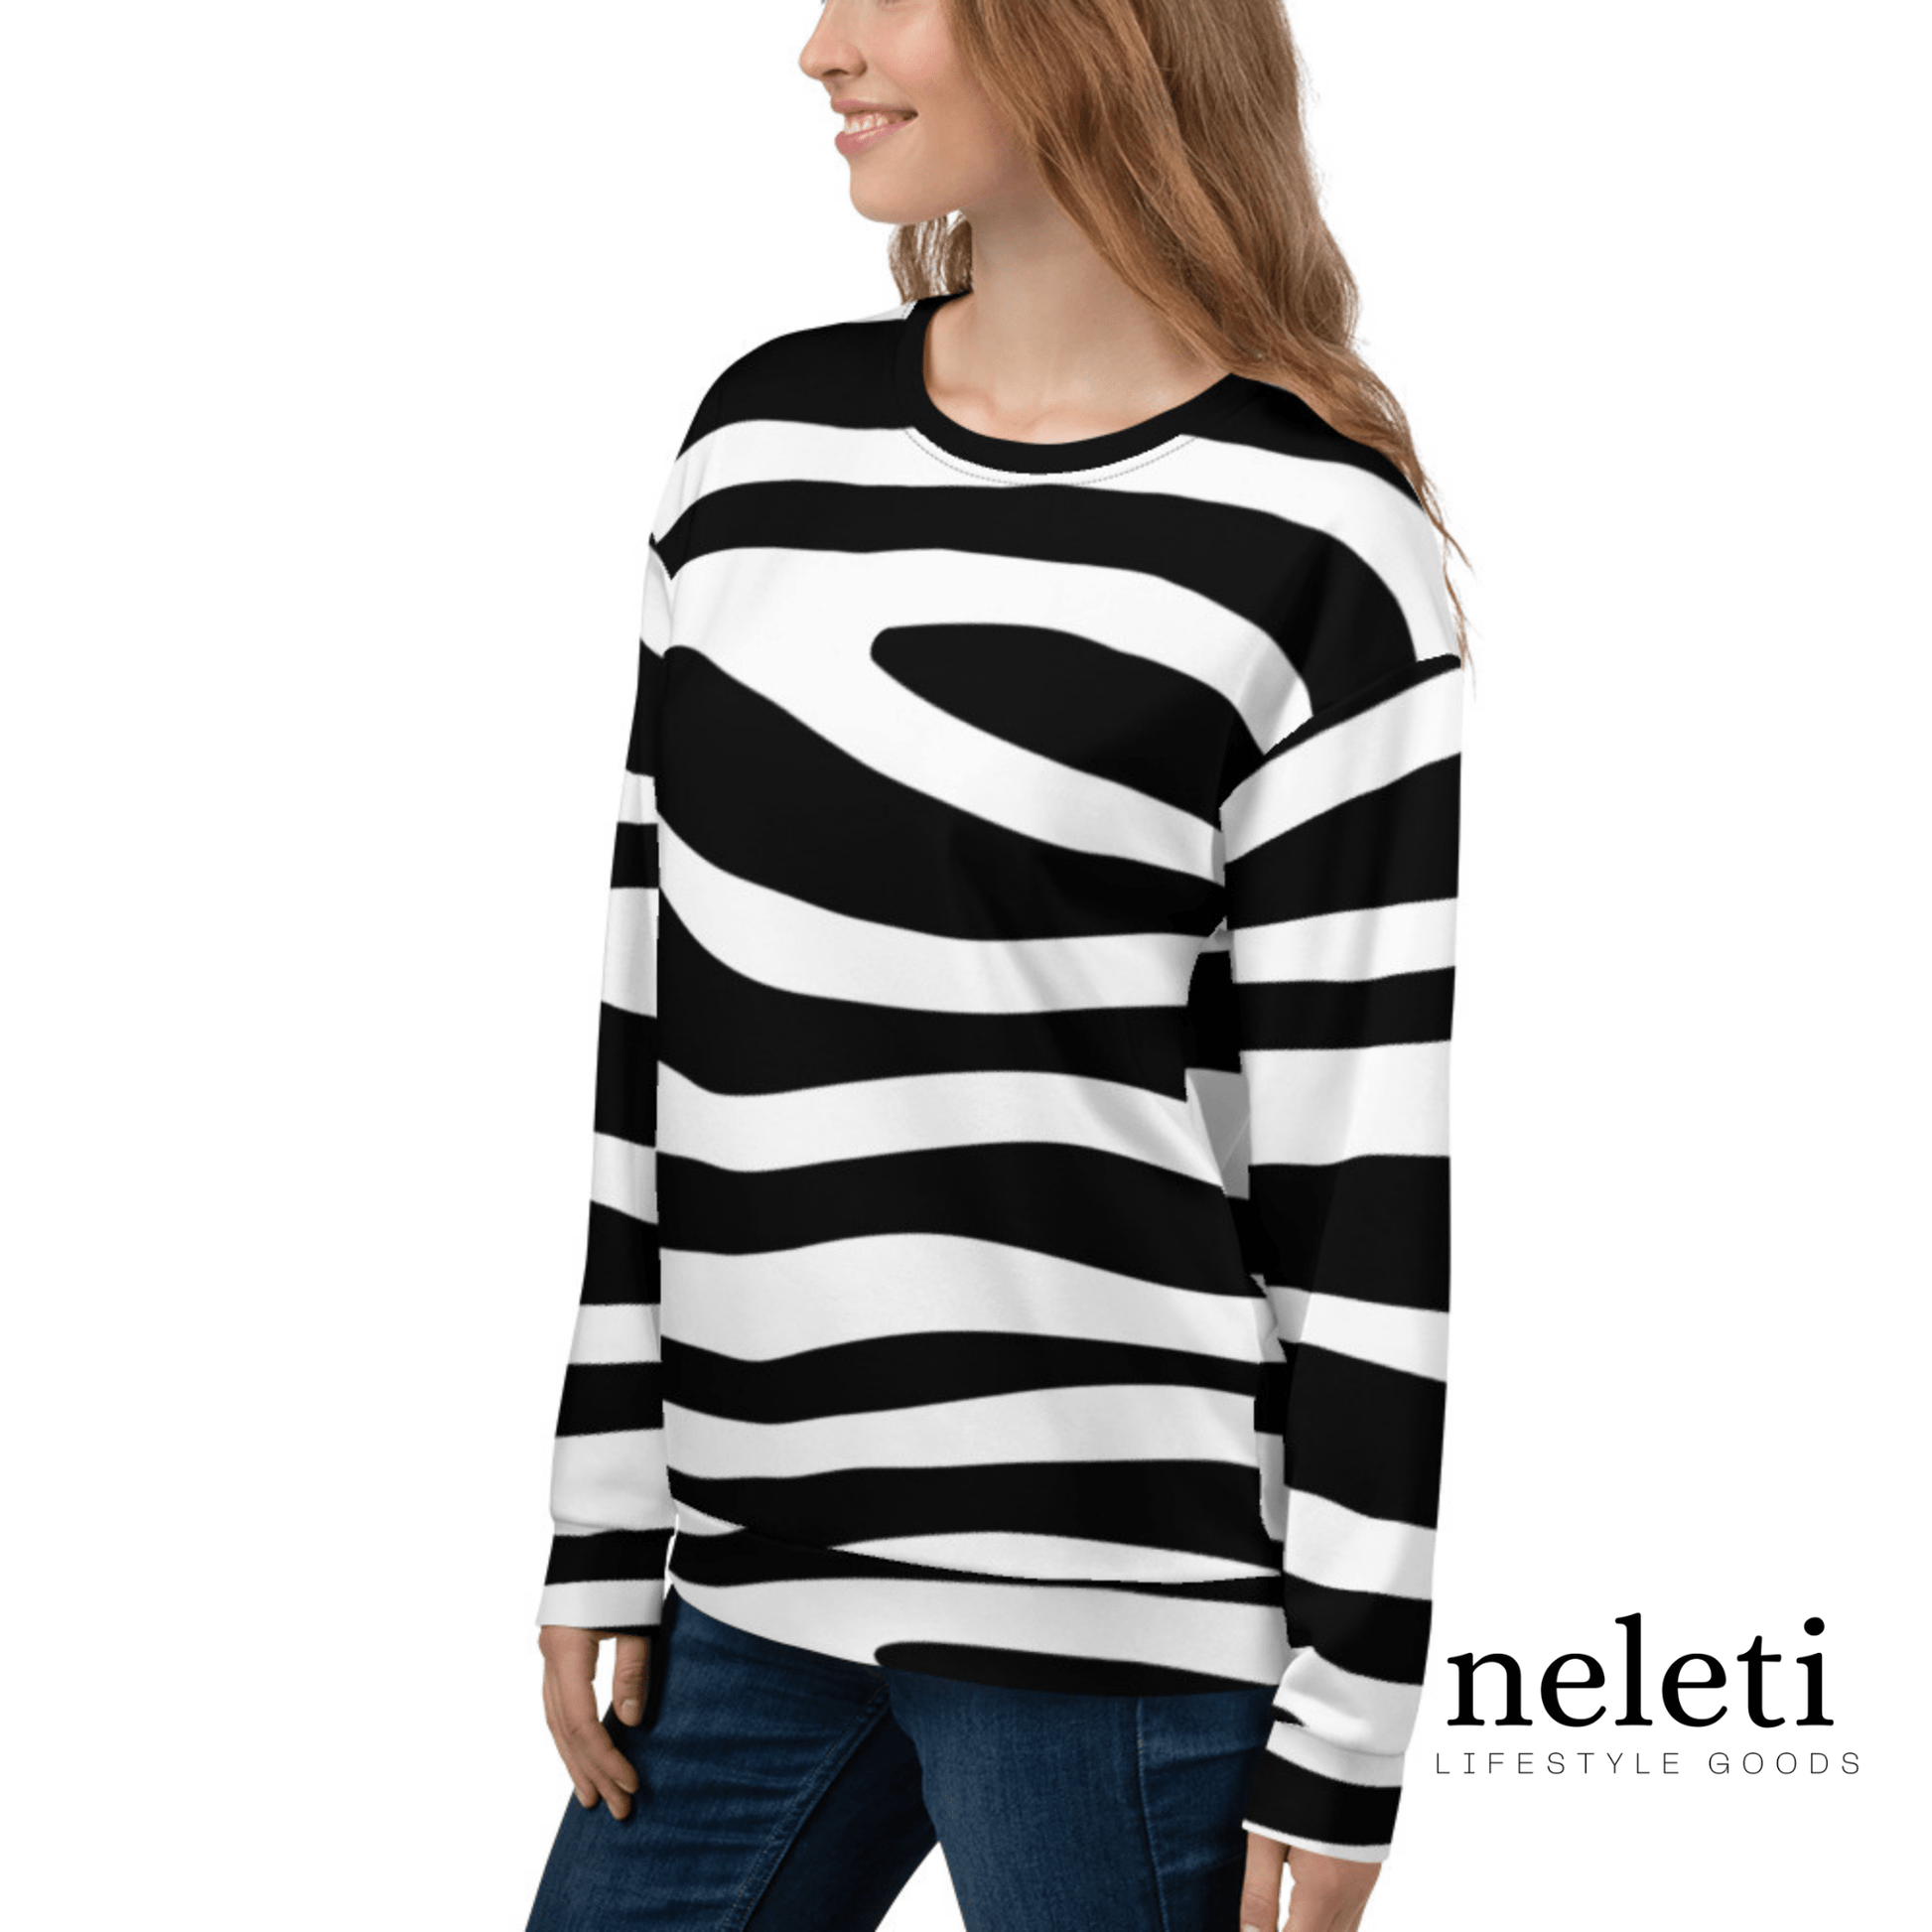 neleti.com-black-and-white-wavy-stripped-sweatshirt-for-women